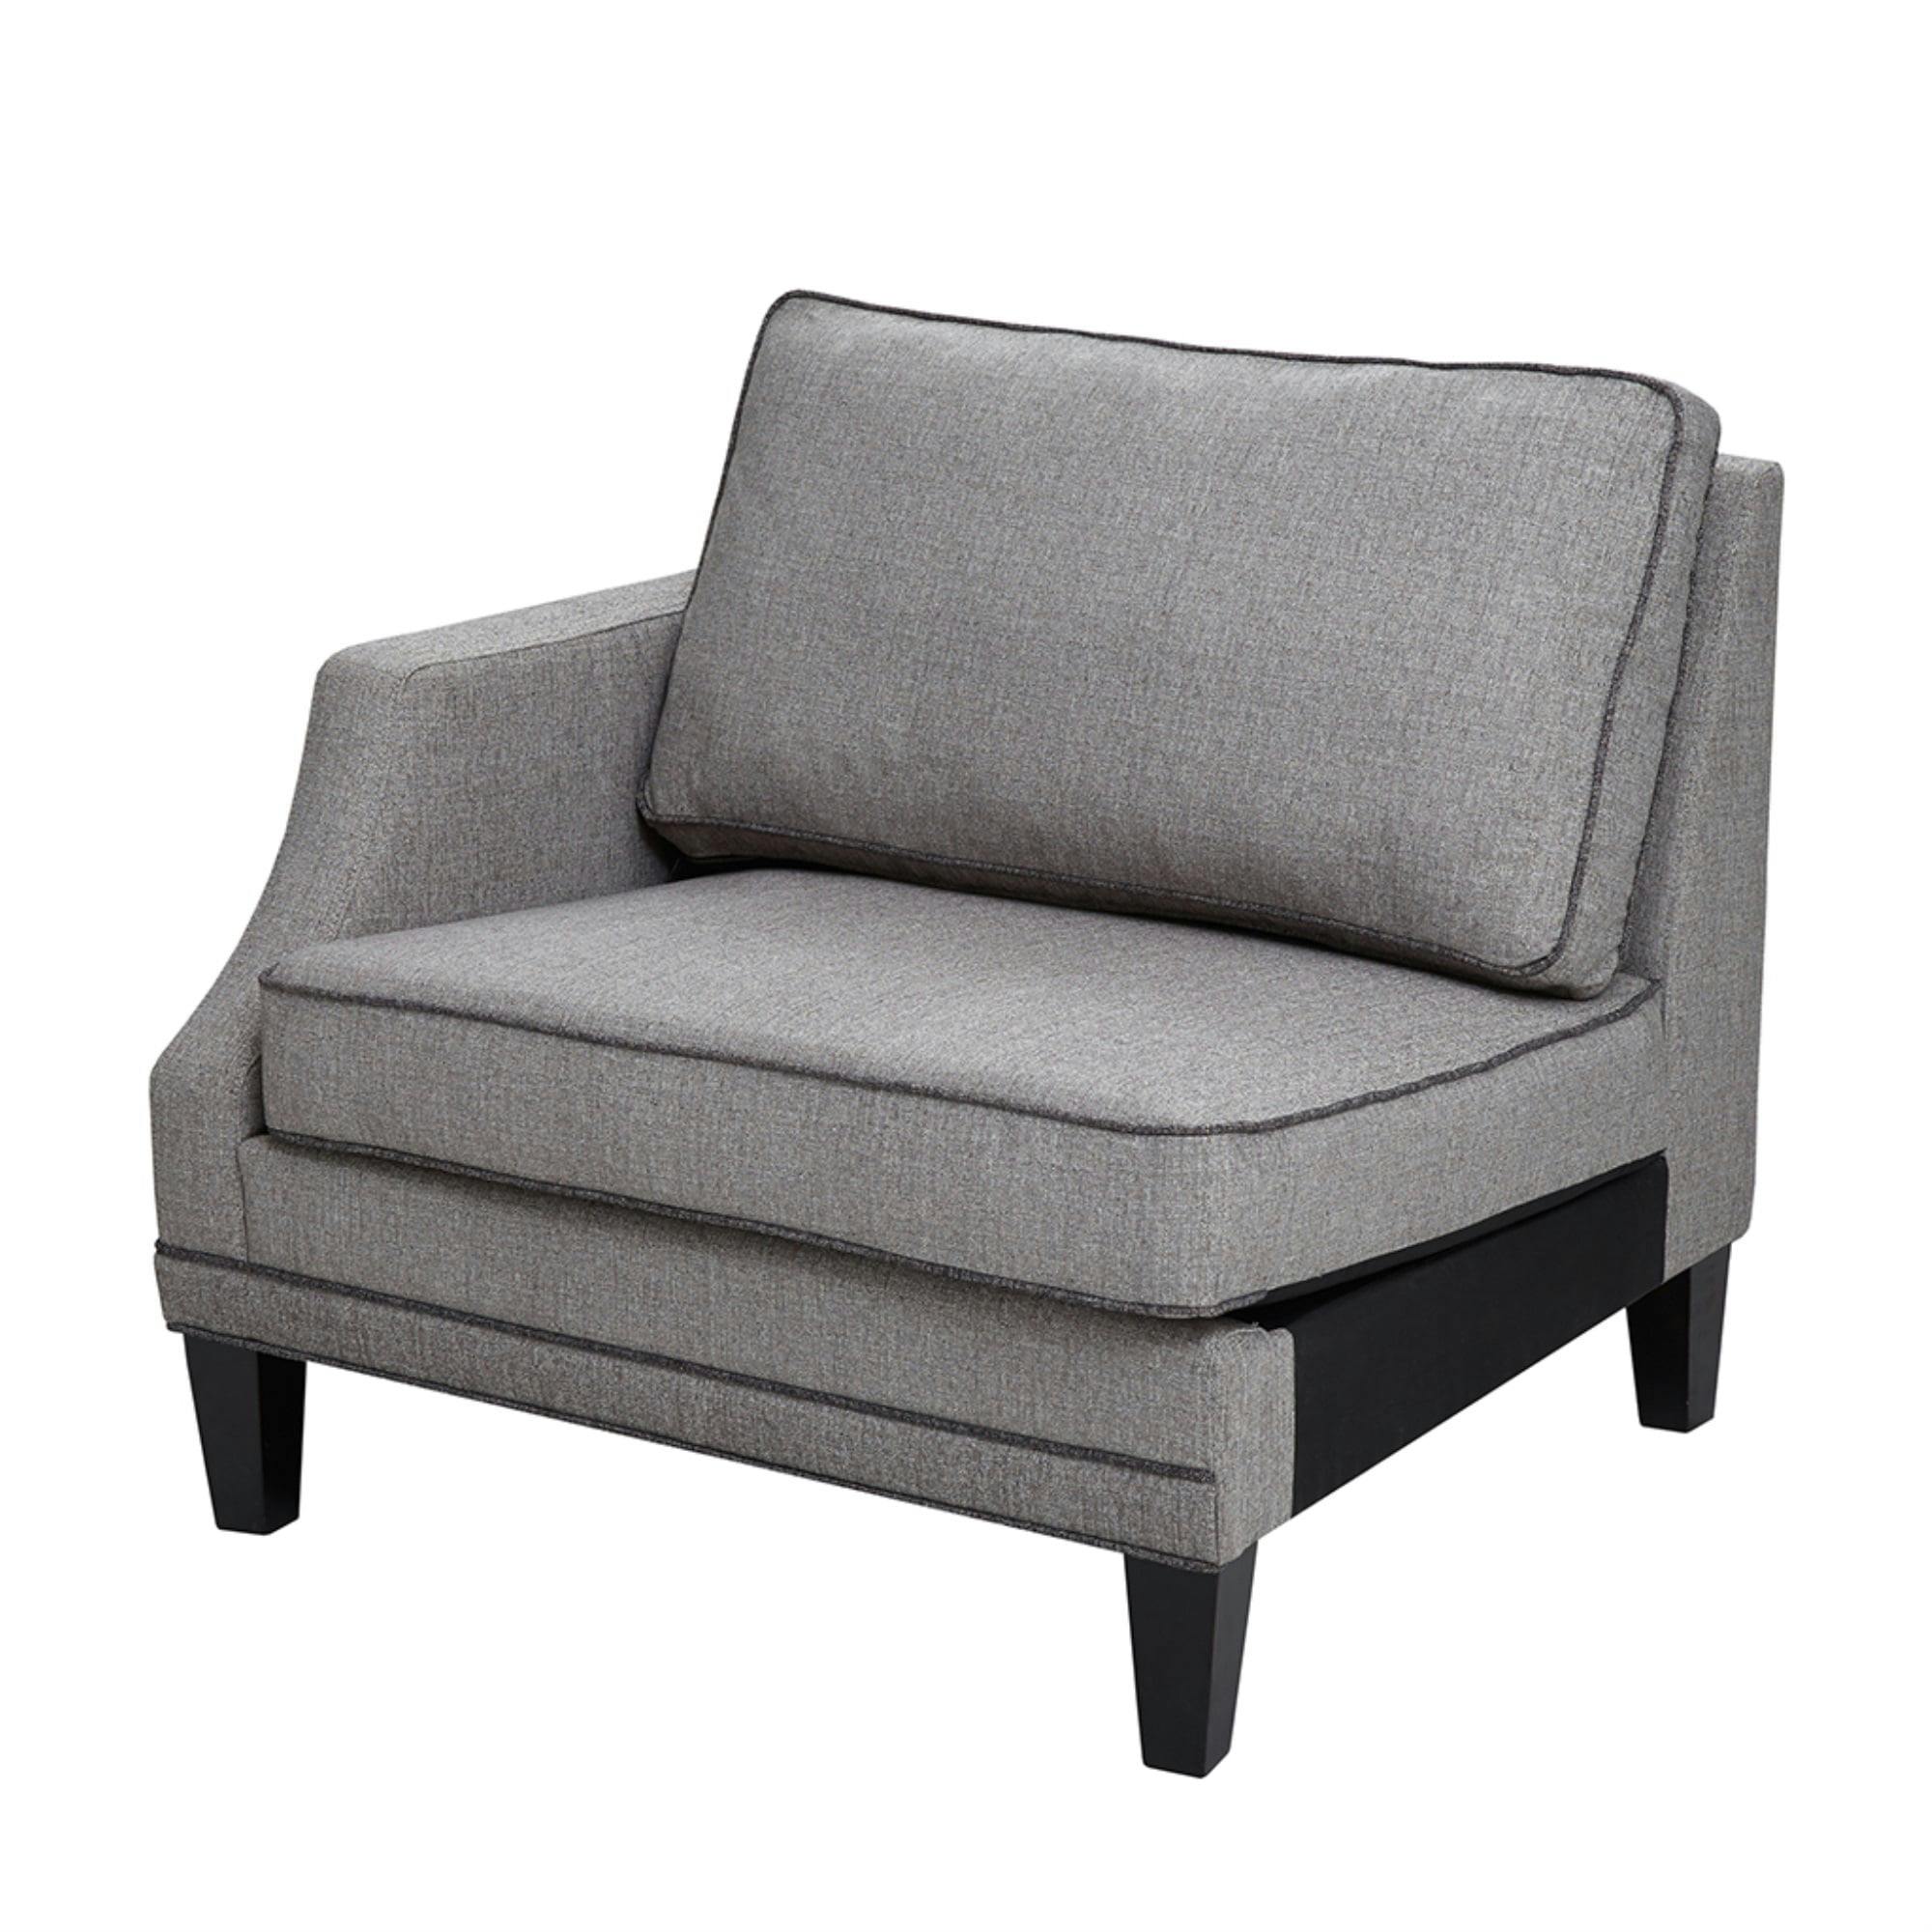 Classic Comfort 36" Grey Sectional Sofa with Ebony Wood Legs